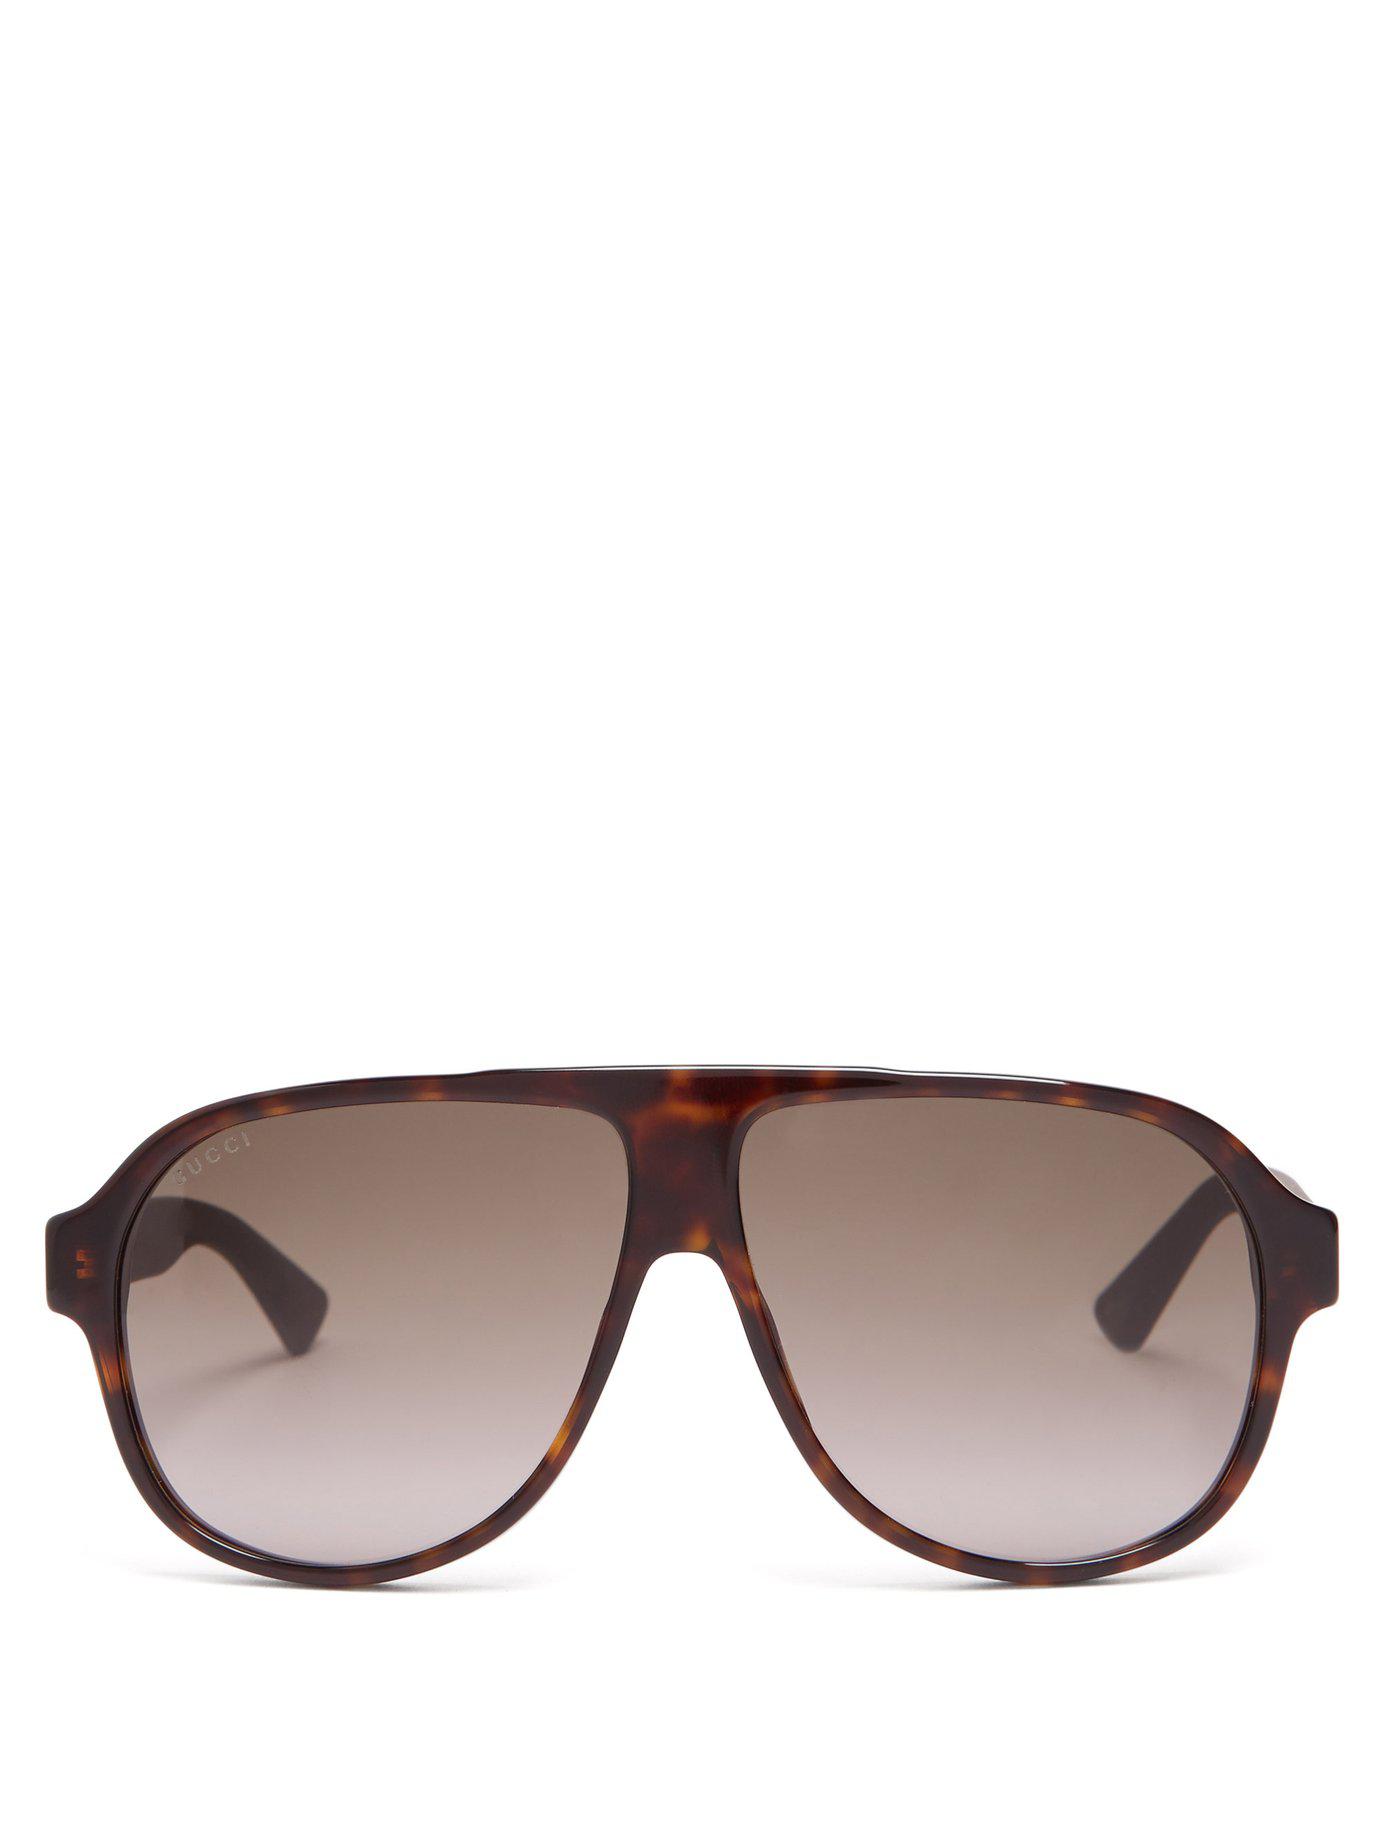 Gucci Rubber Aviator Acetate Sunglasses In Brown For Men Lyst